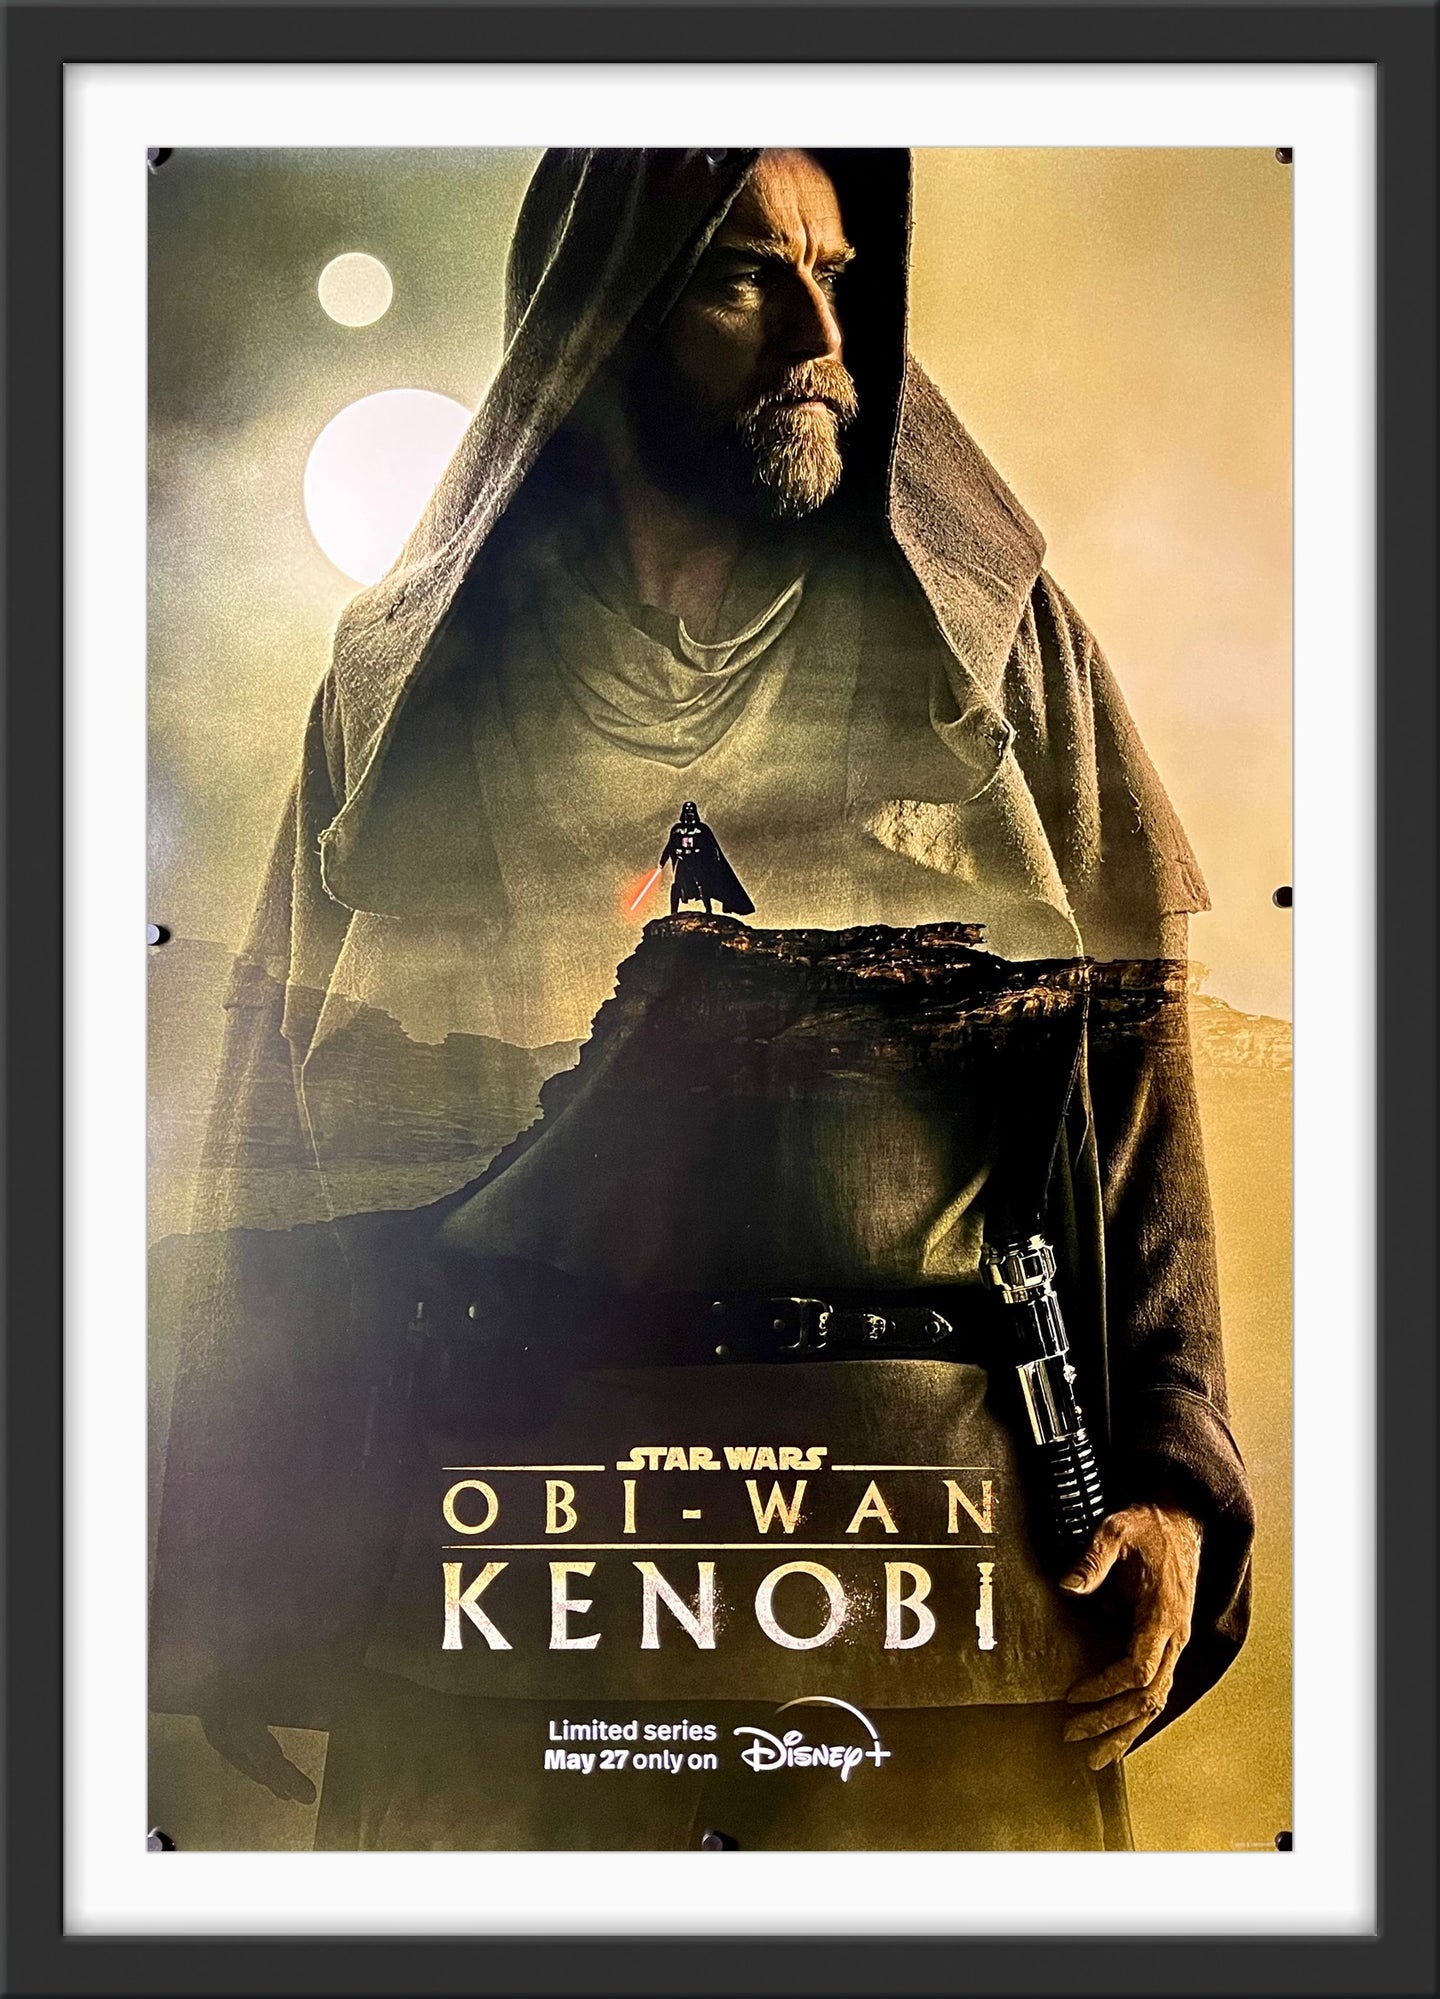 An original poster for the Star Wars Disney+ Limited Series Obi-Wan Kenobi